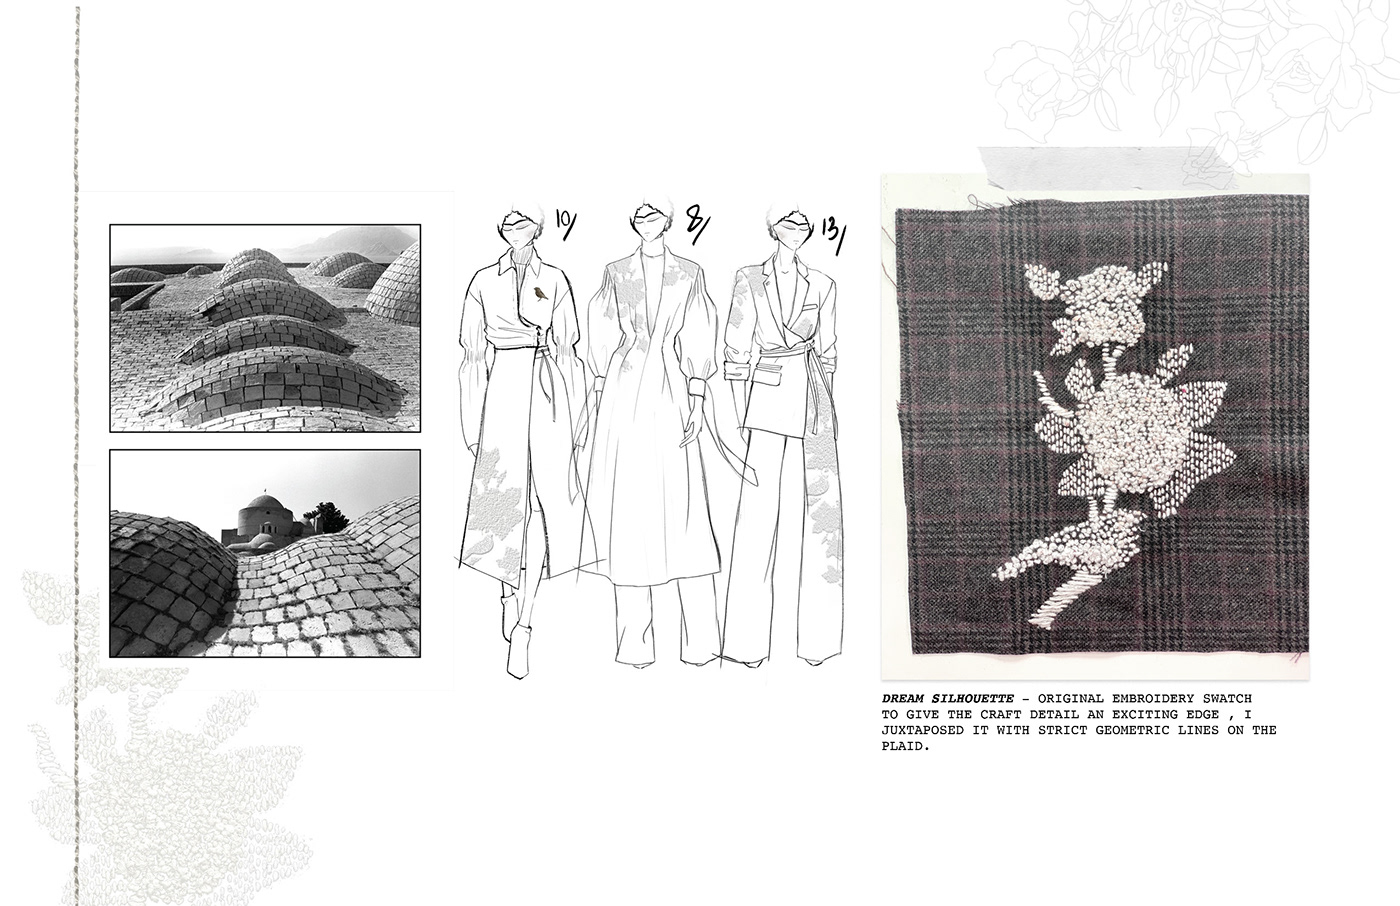 cfda craft design Embroidery fashion design finalist handmade knitted textile yarn